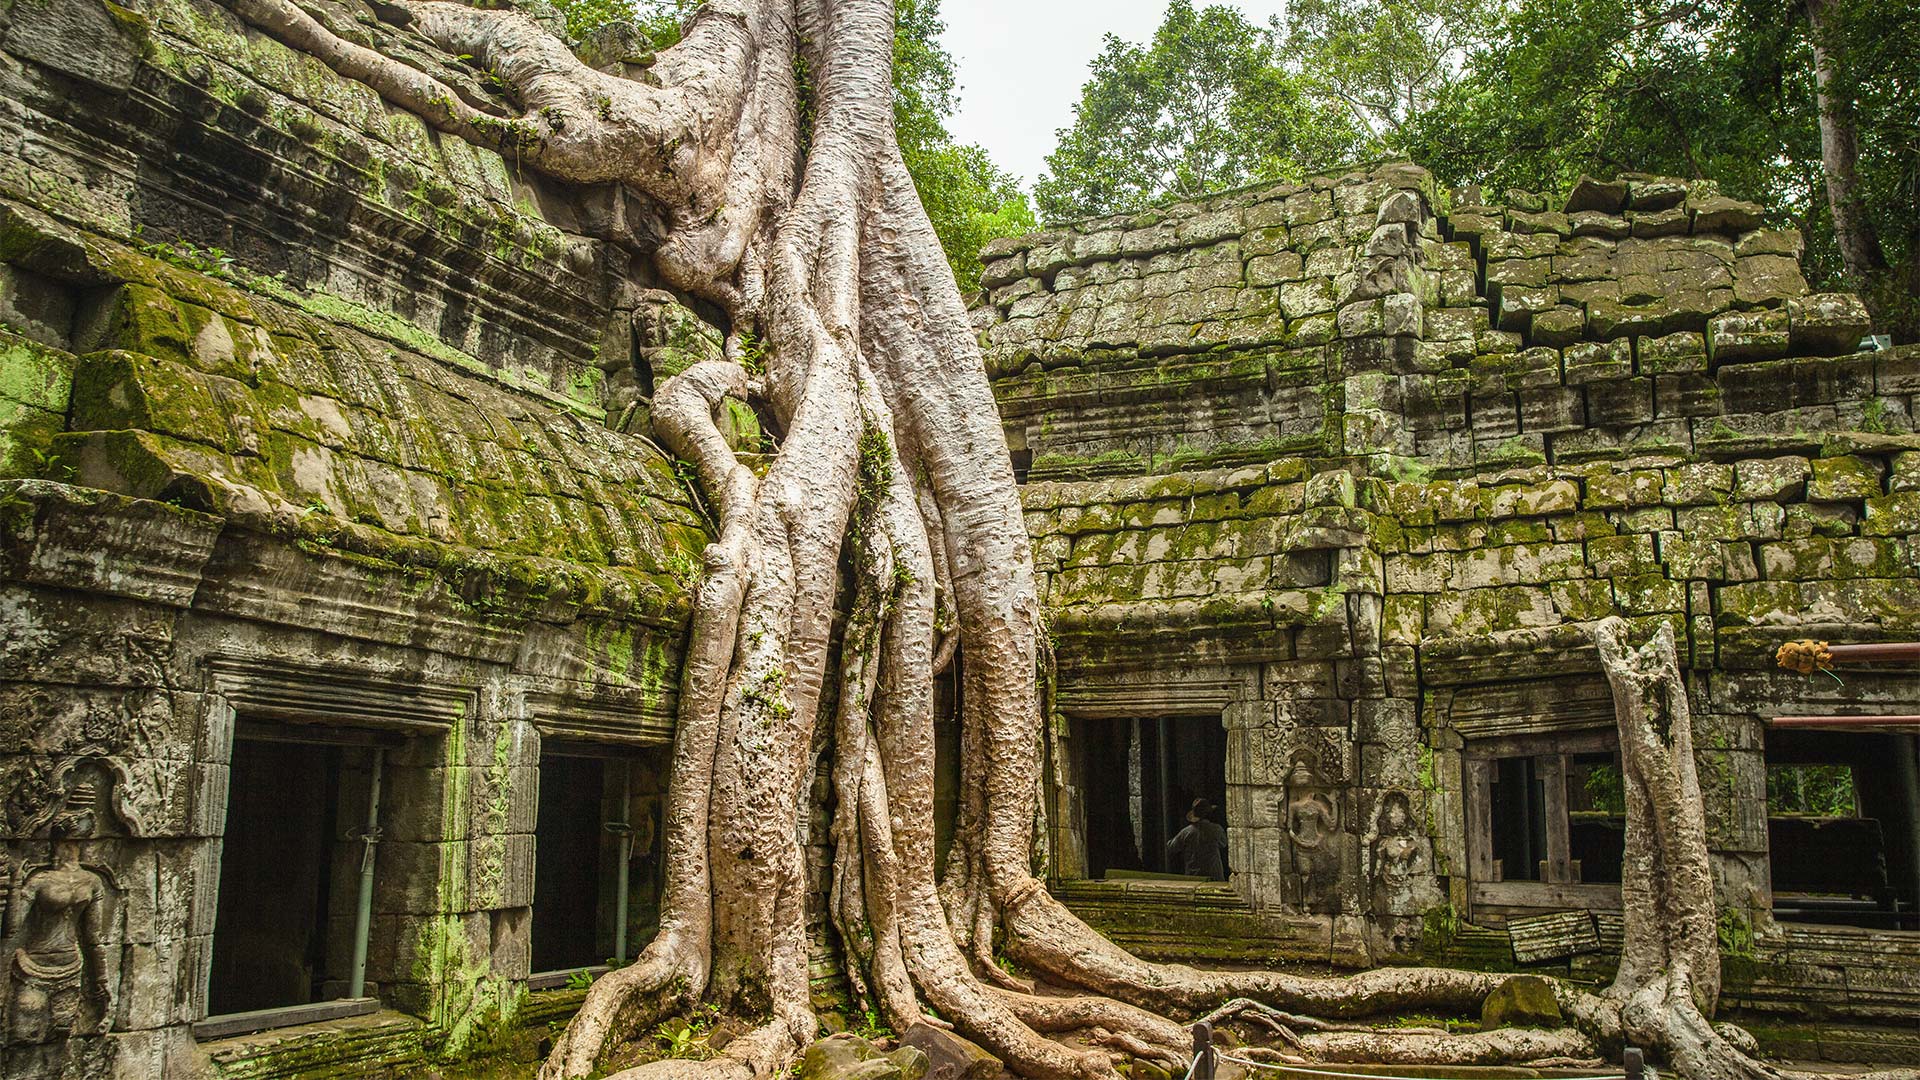 Guide in Angkor Wat